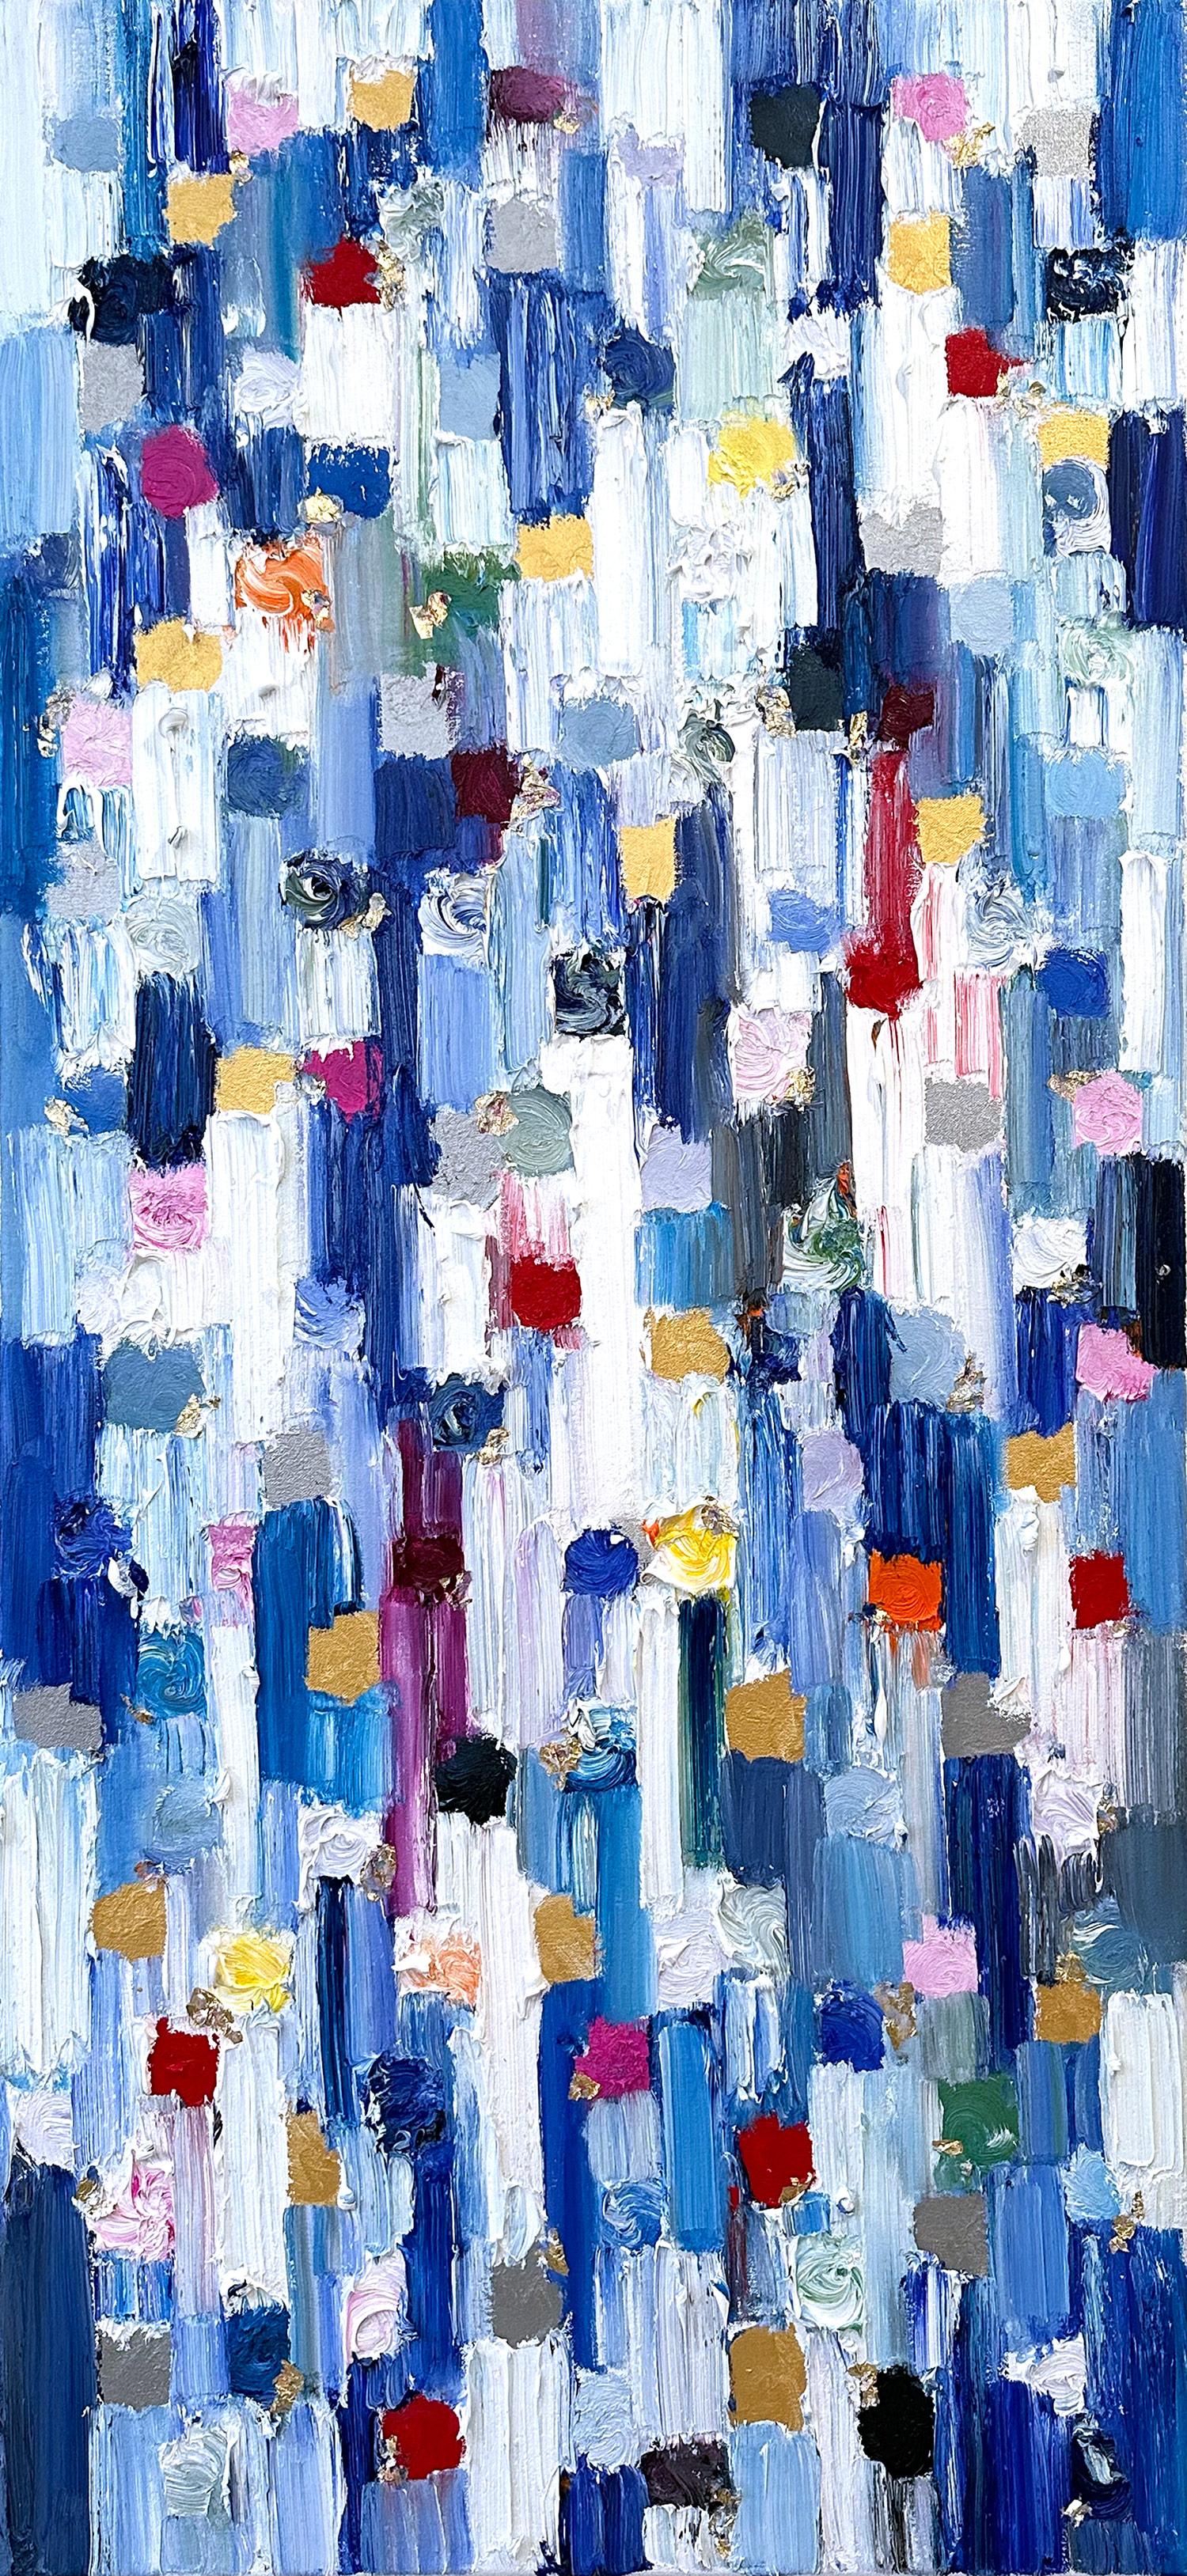 Abstract Painting Cindy Shaoul - "Dripping Dots - Fifth Avenue" Peinture à l'huile contemporaine multicolore sur toile